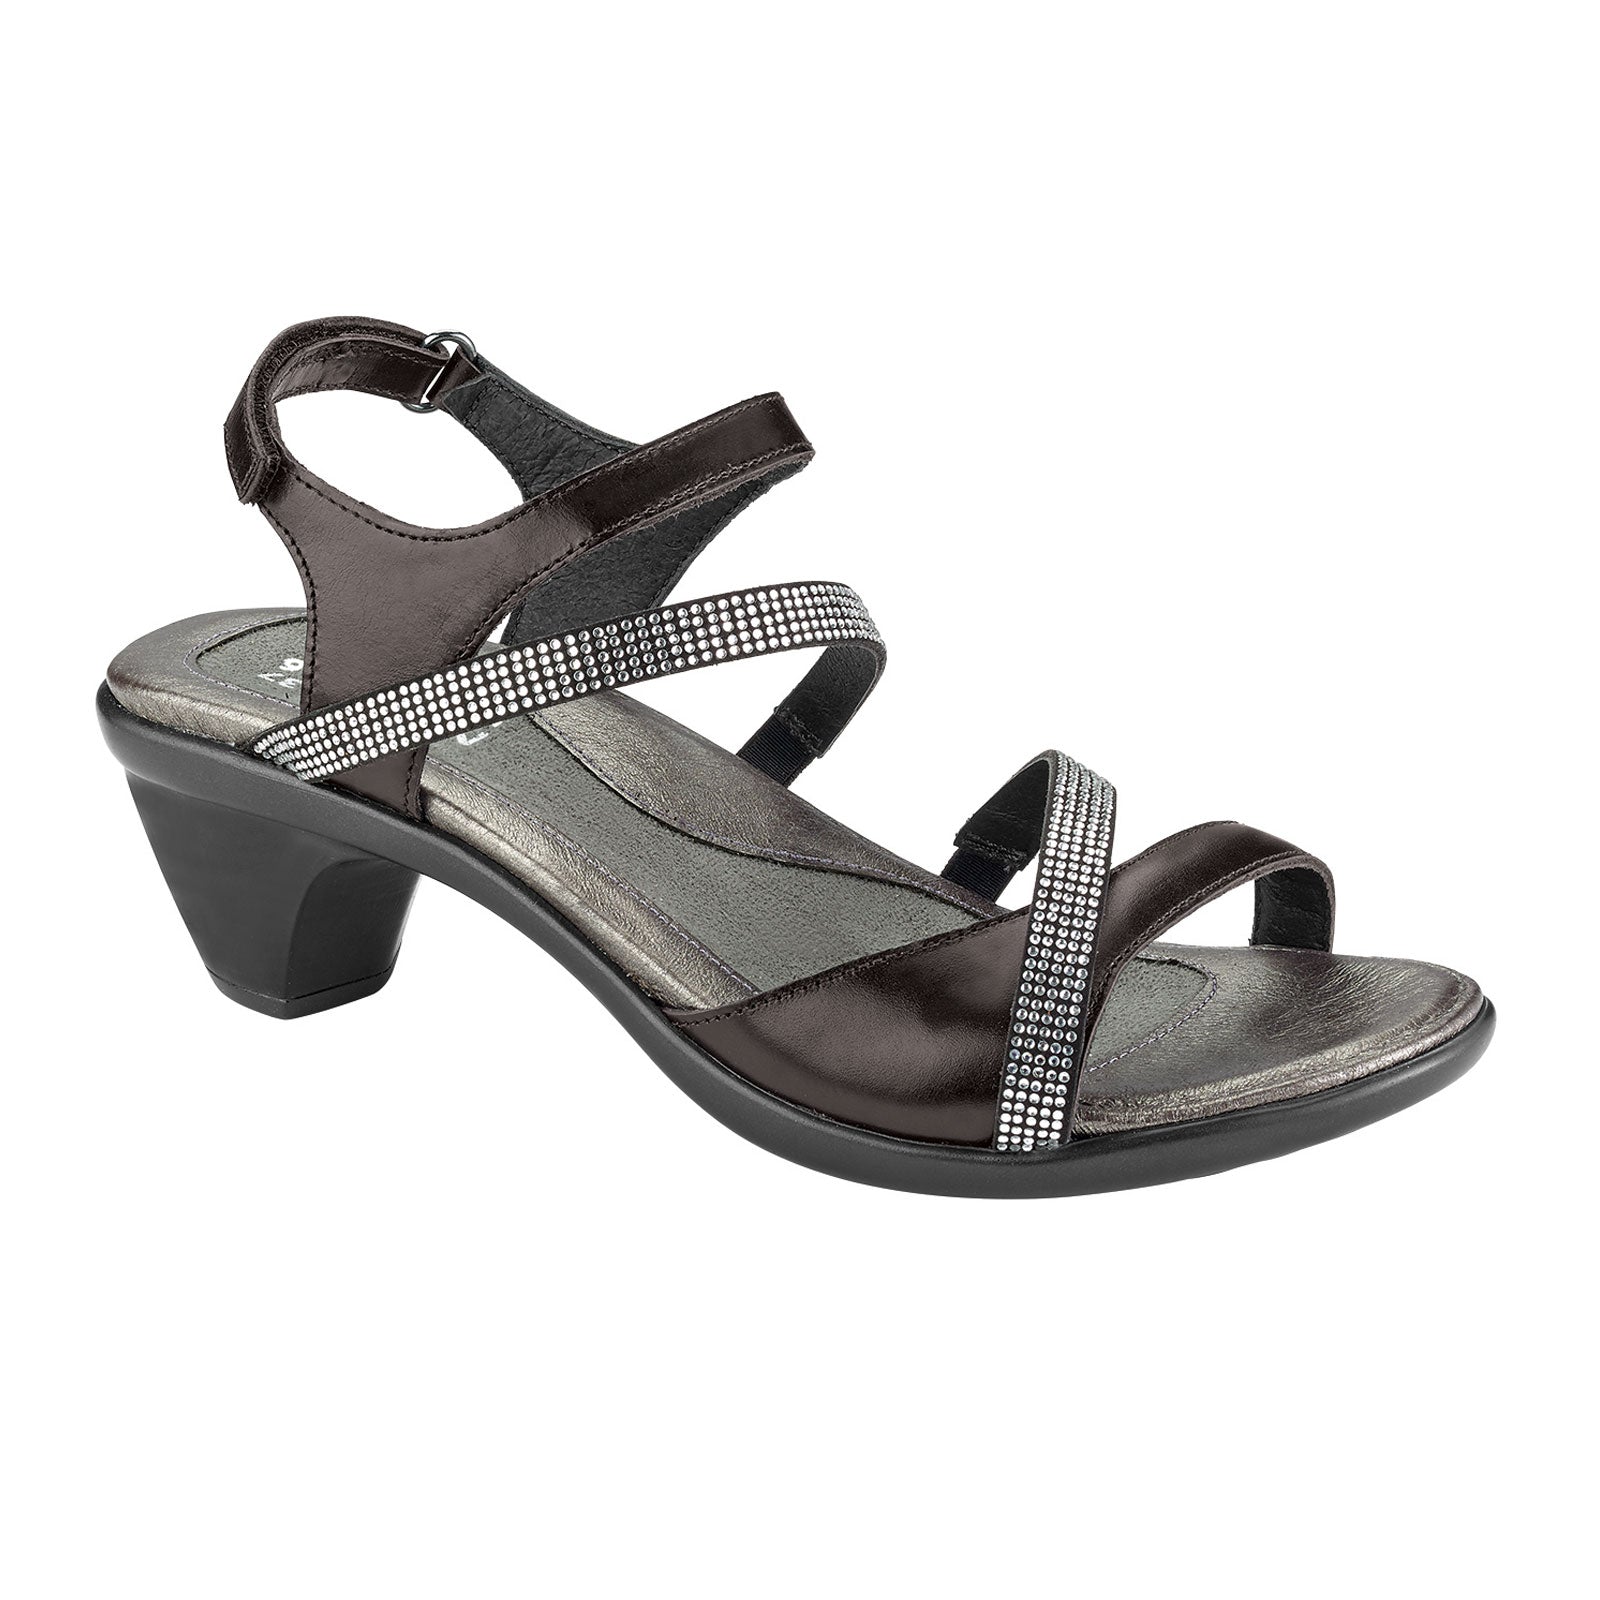 Naot Innovate Heeled Sandal (Women) - Black Madras Leather/Black/Clear Rhinestones Sandals - Heeled - The Heel Shoe Fitters